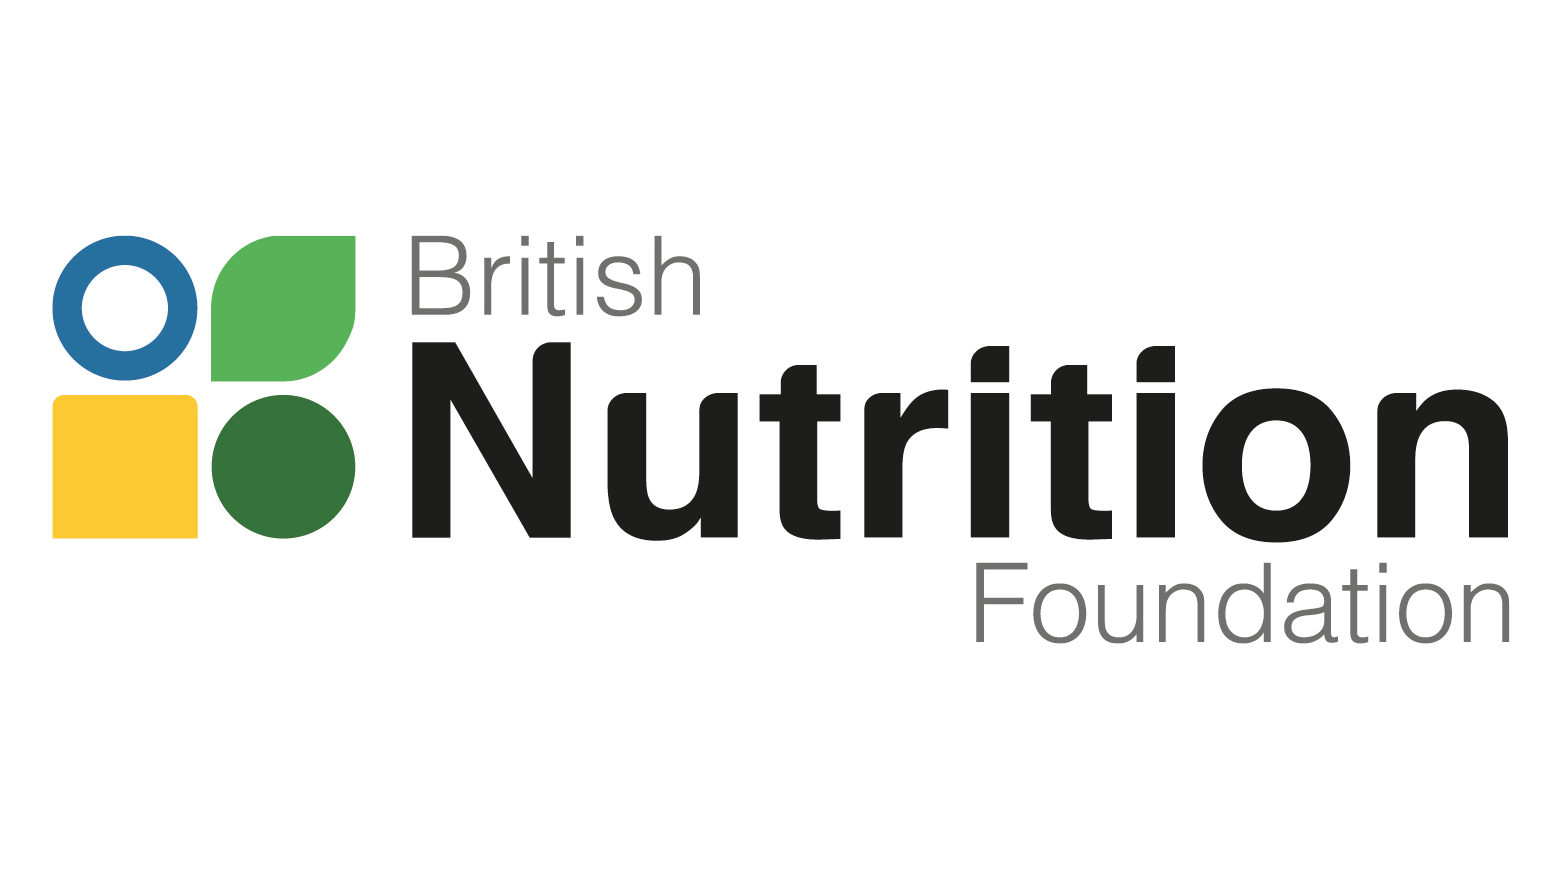 British Nutrition Foundation logo